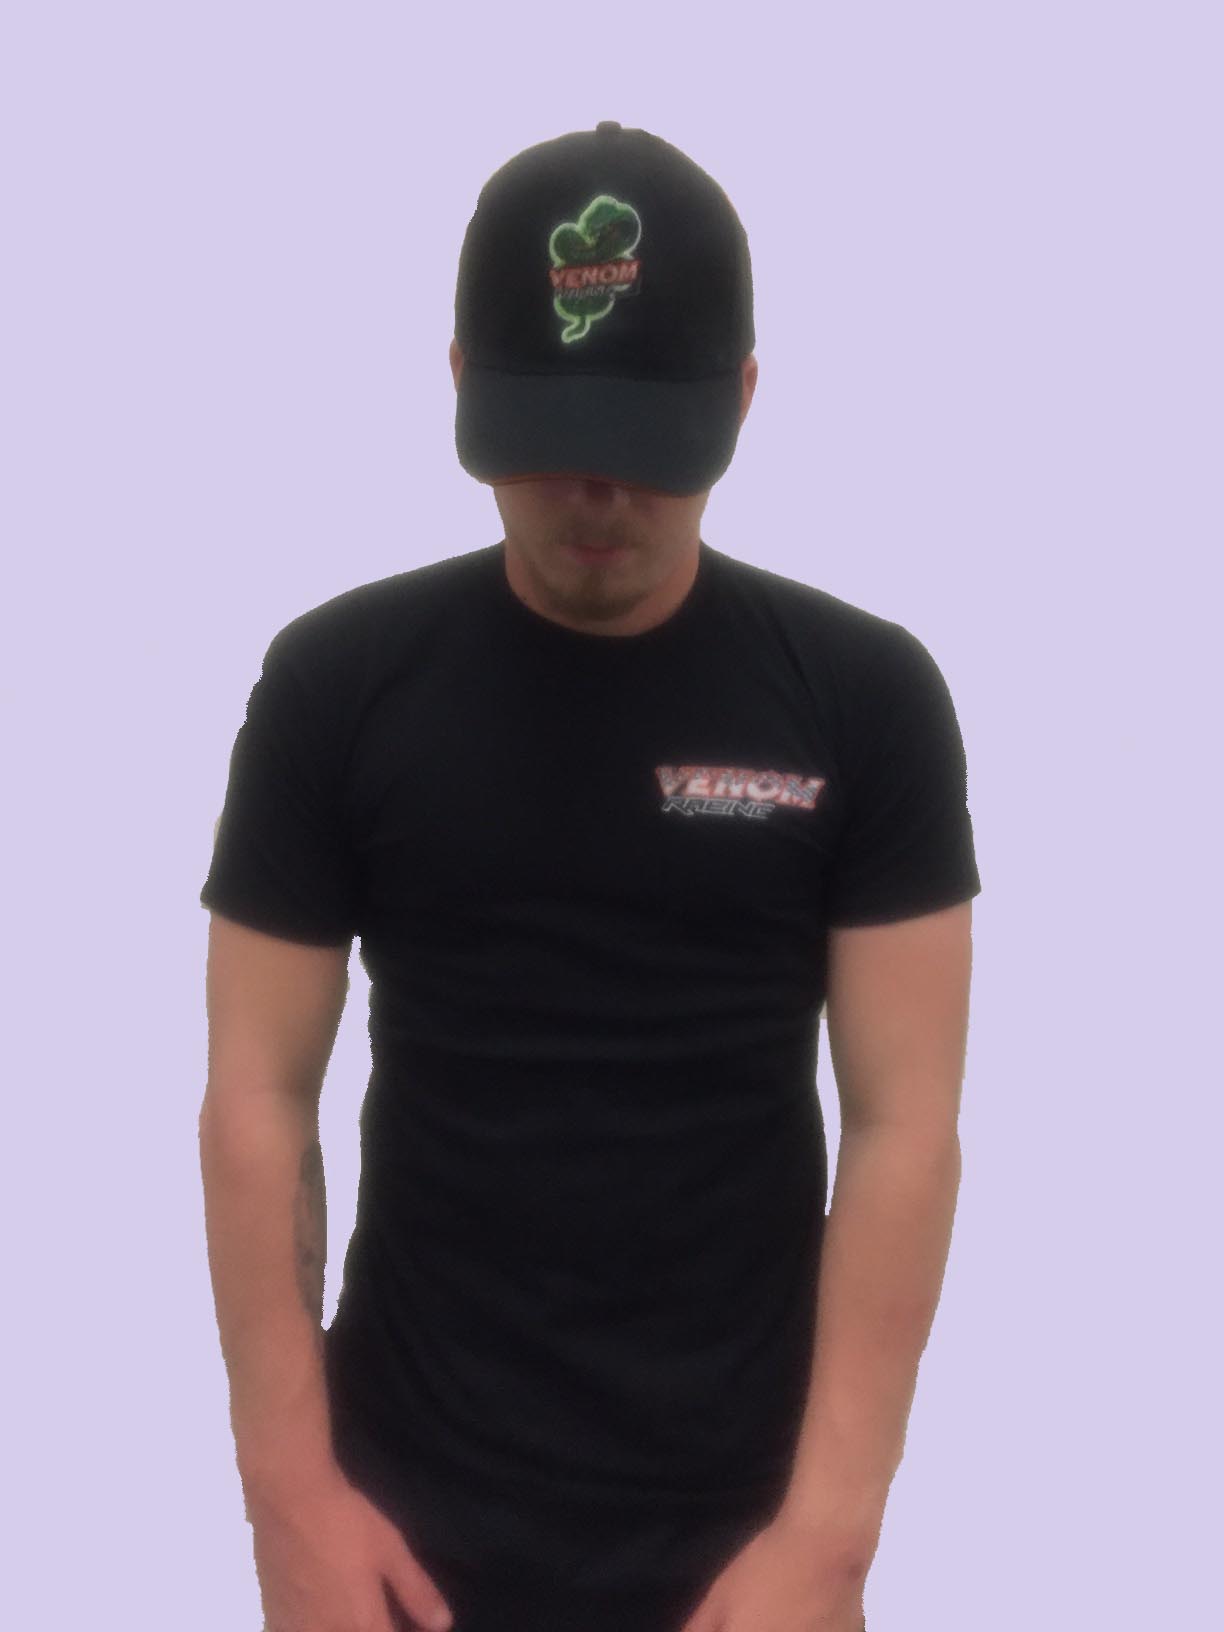 Venom Racing Tee Shirt